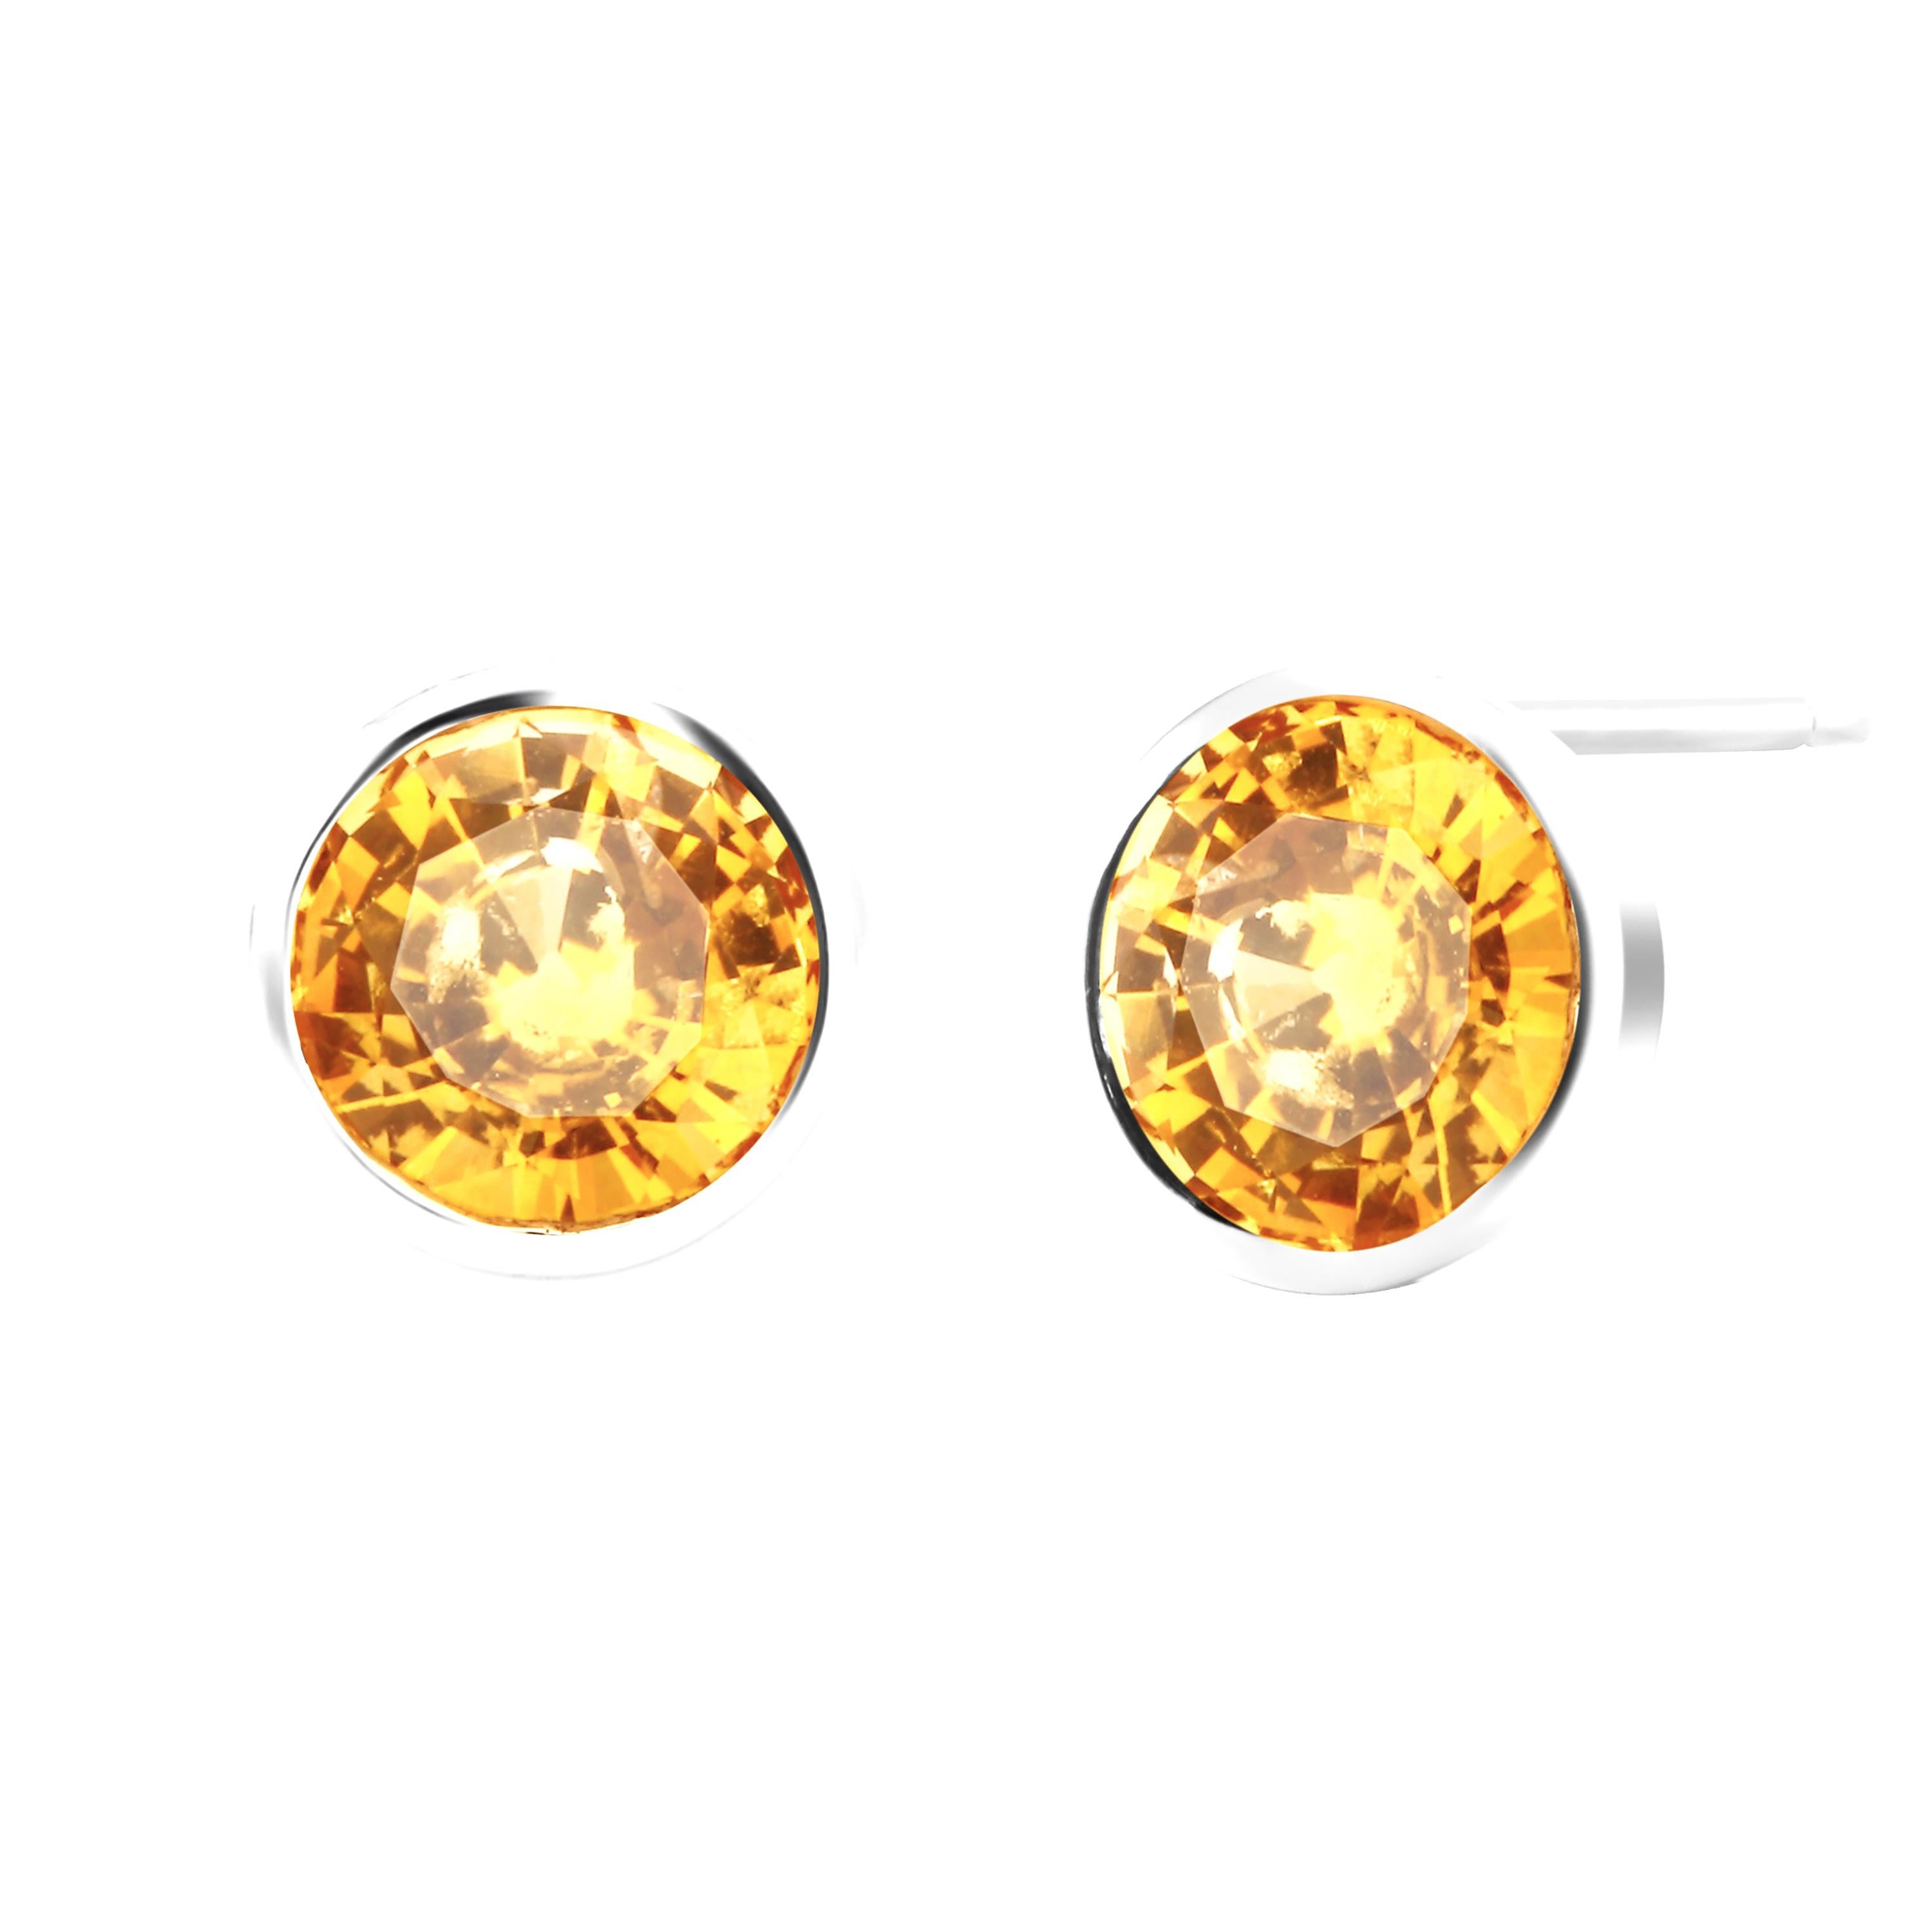 Contemporary Ceylon Yellow Sapphire Bezel Set in White Gold Stud Earrings